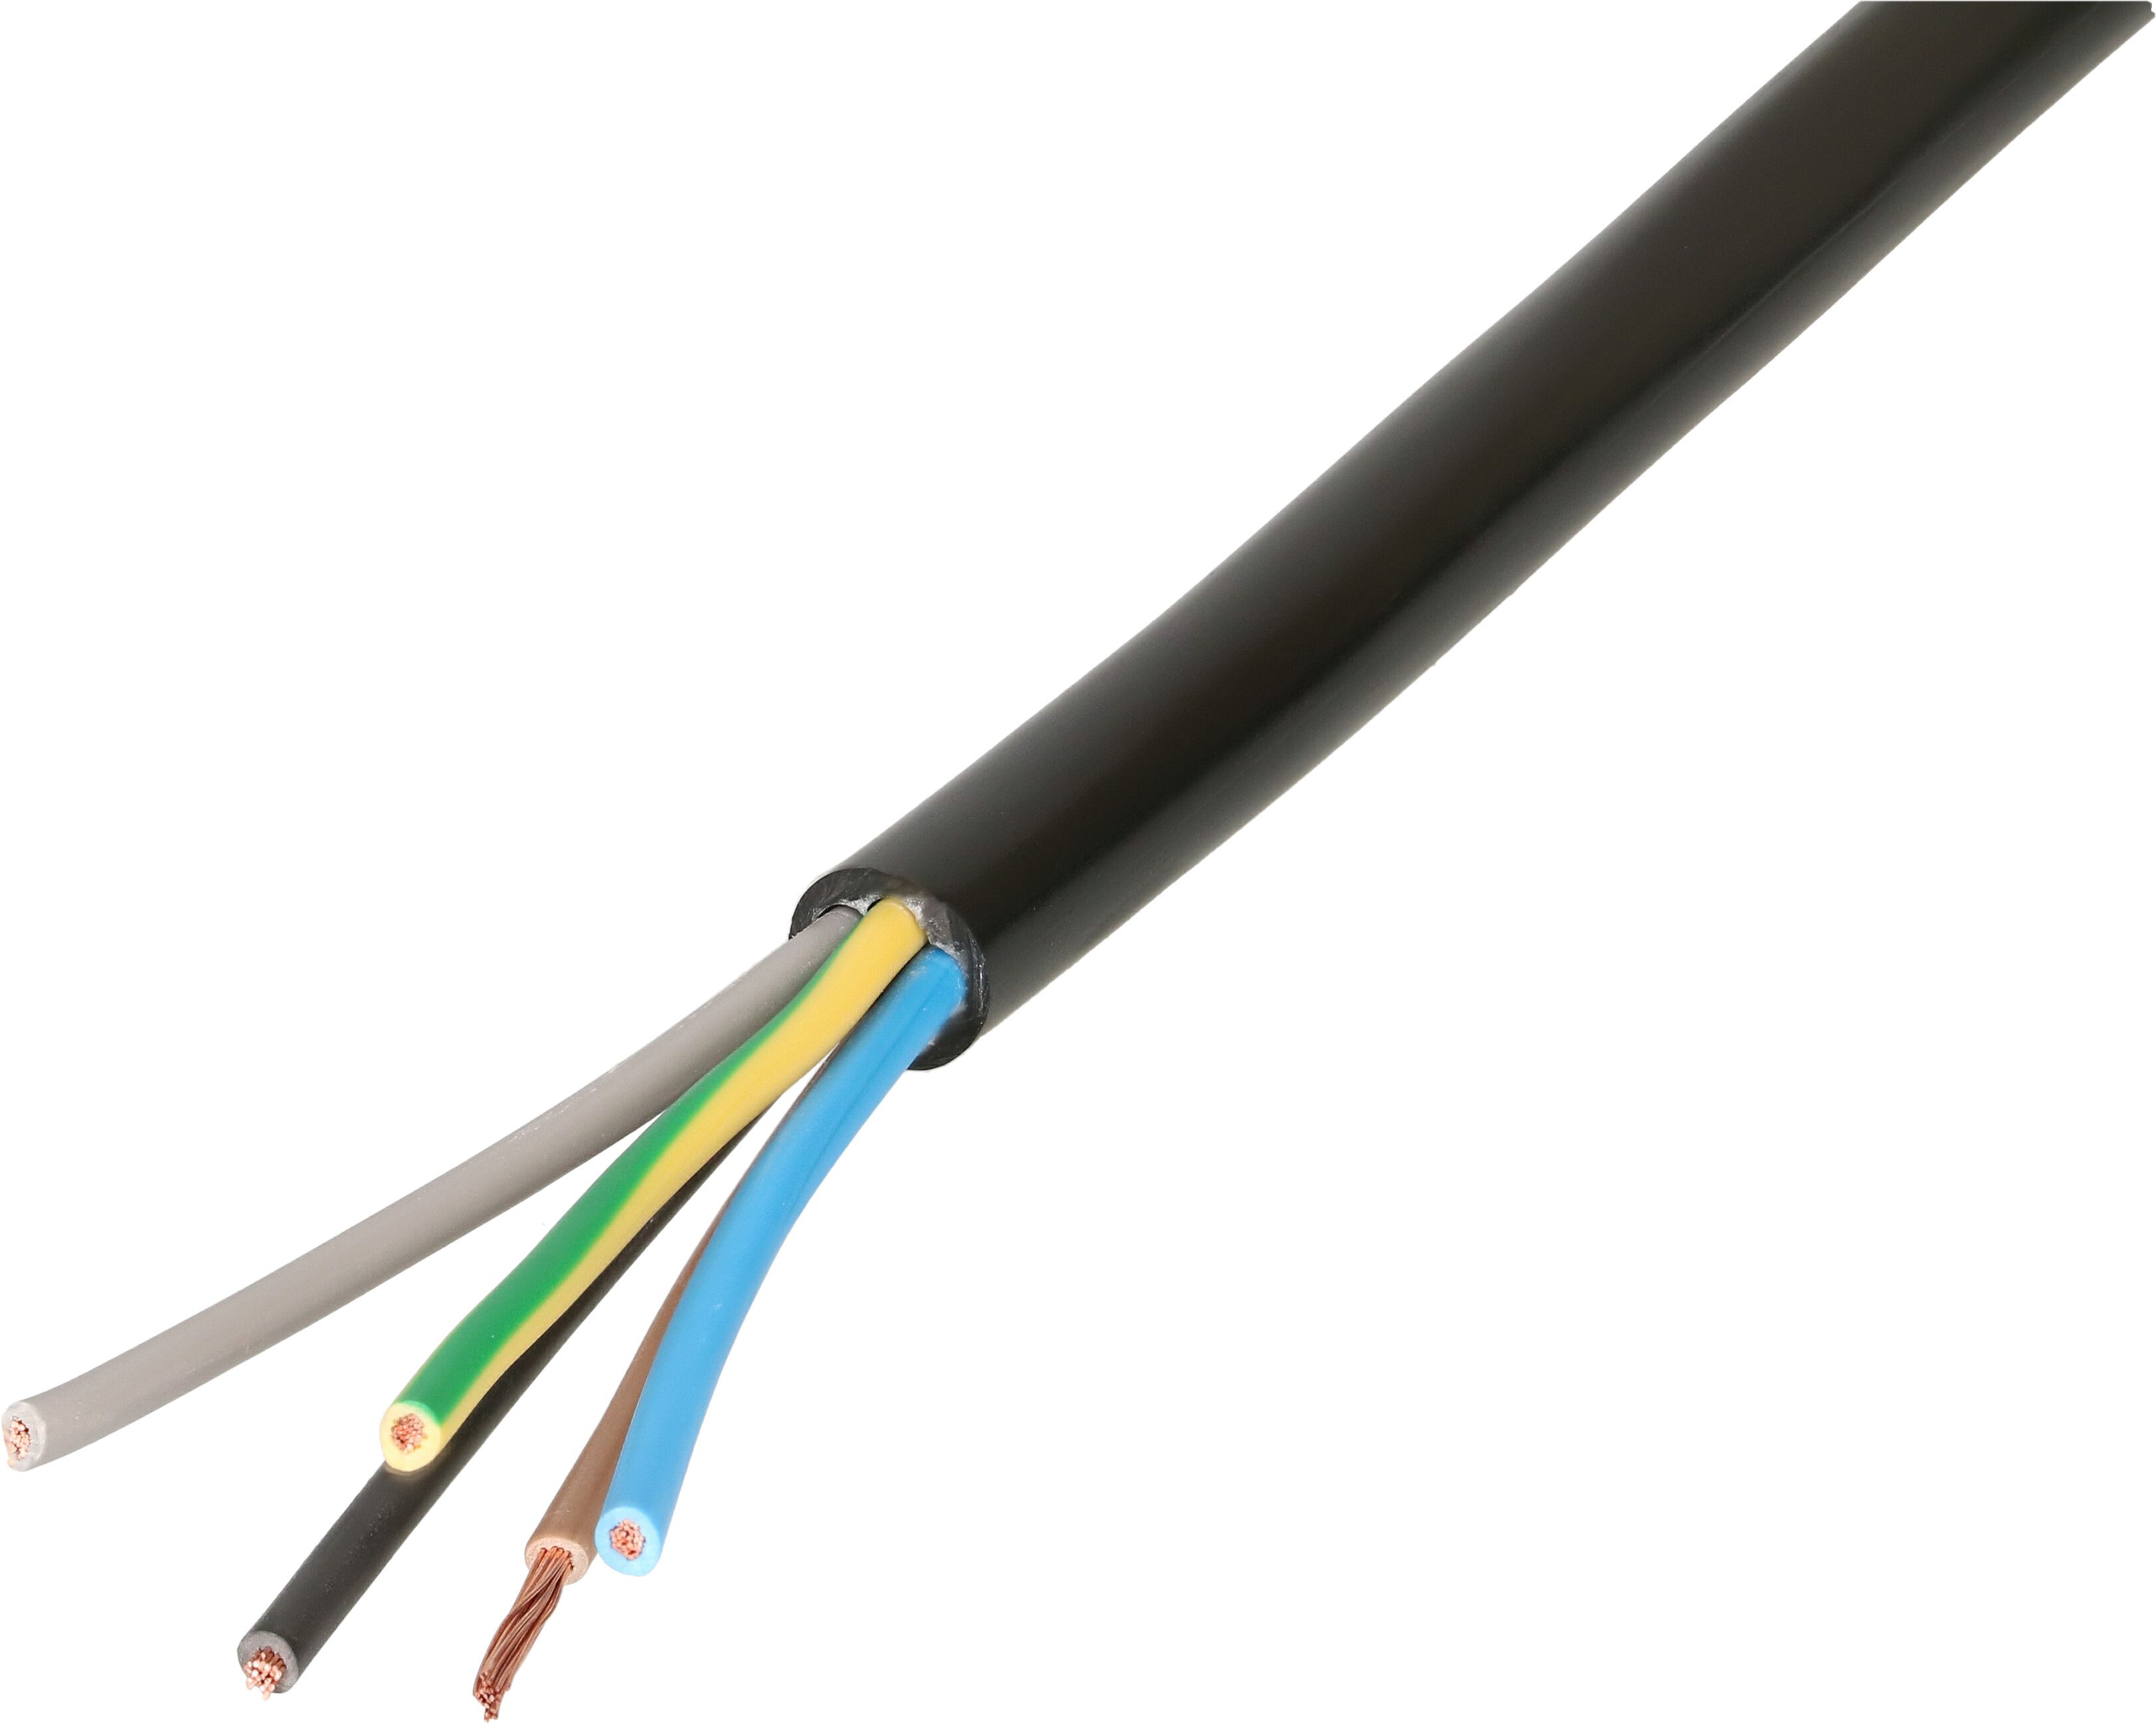 Cable H05VV-F5G1,5mm2 black RAL 9005 - MAX HAURI AG